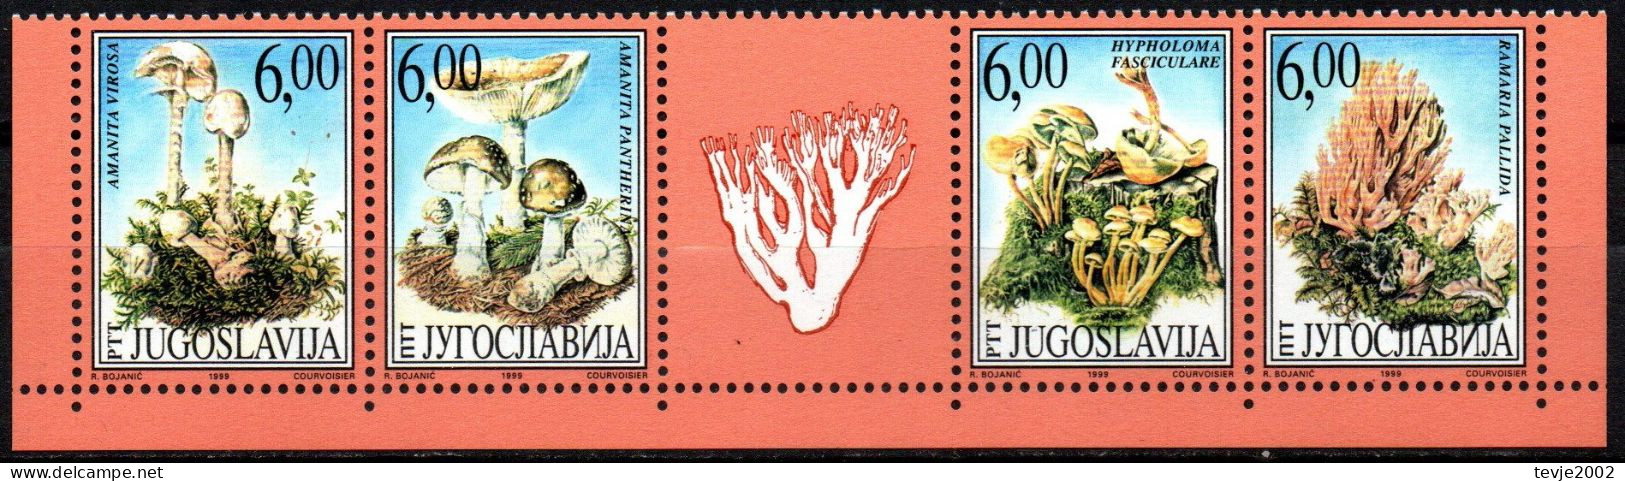 Jugoslawien 1999 - Mi.Nr. 2914 - 2917 - Postfrisch MNH - Pilze Mushrooms - Mushrooms